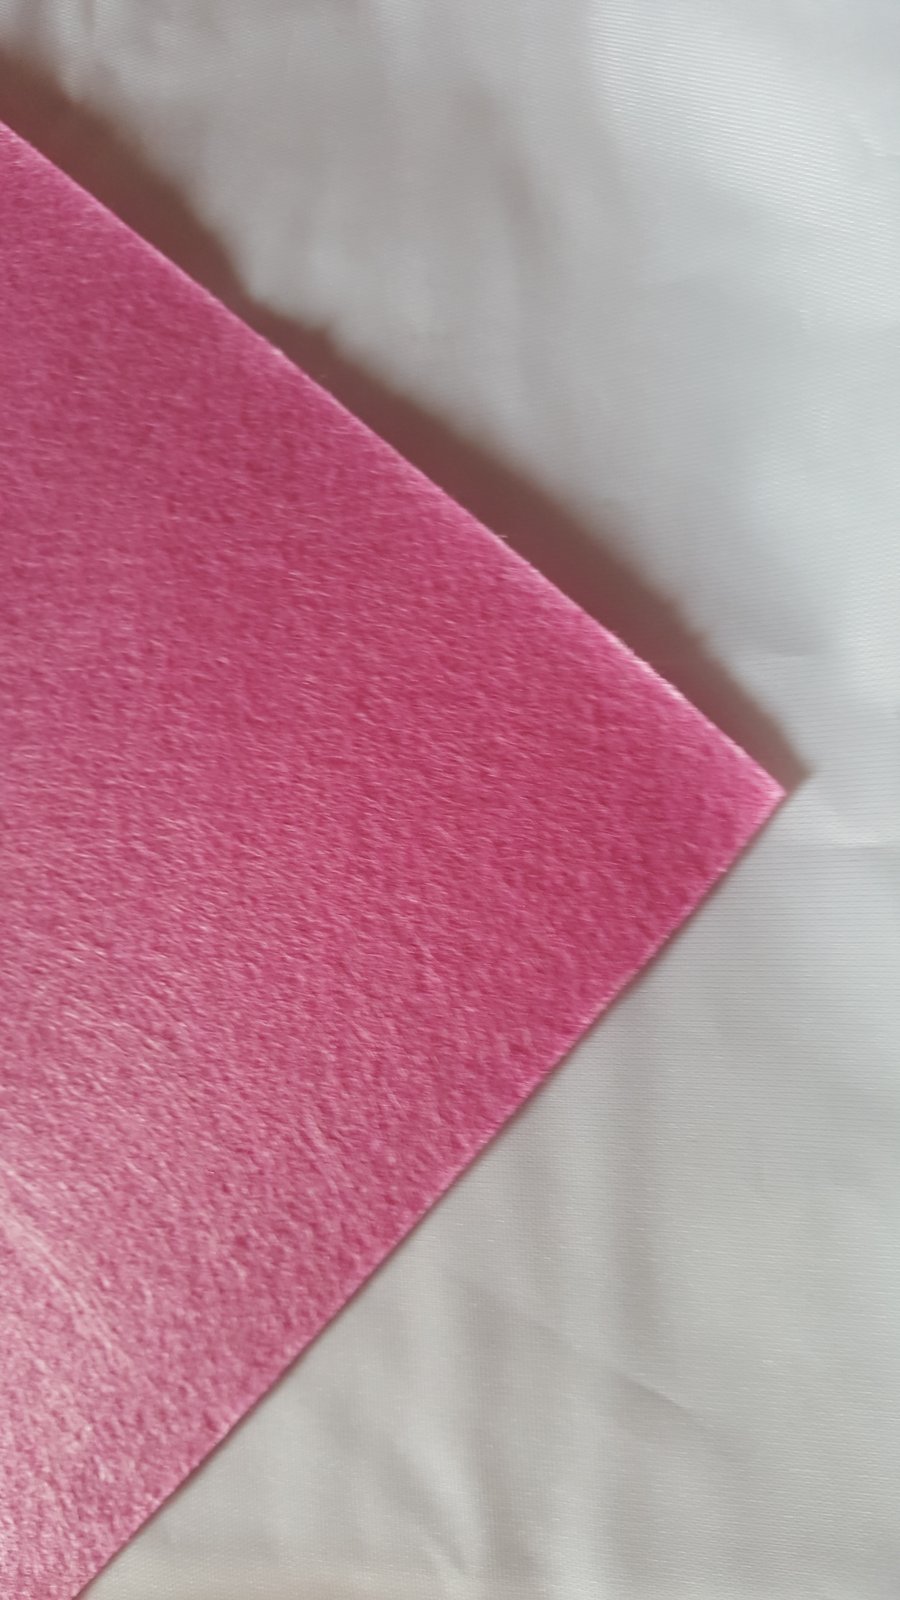 1 x Felt Sheet - Square - 12" (30cm) - Pink 